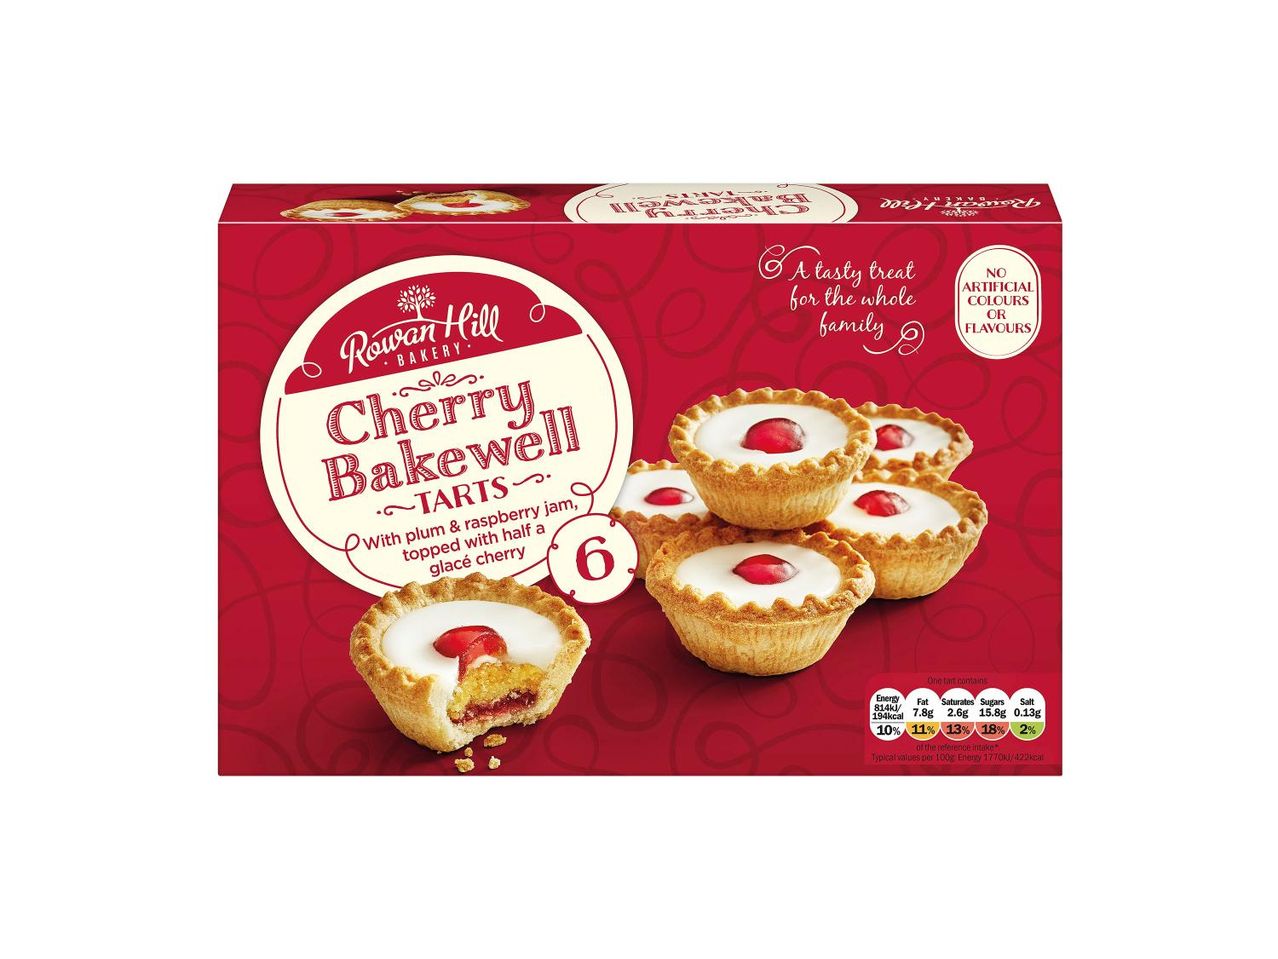 Go to full screen view: Rowan Hill Bakery 6 Cherry Bakewells - Image 1